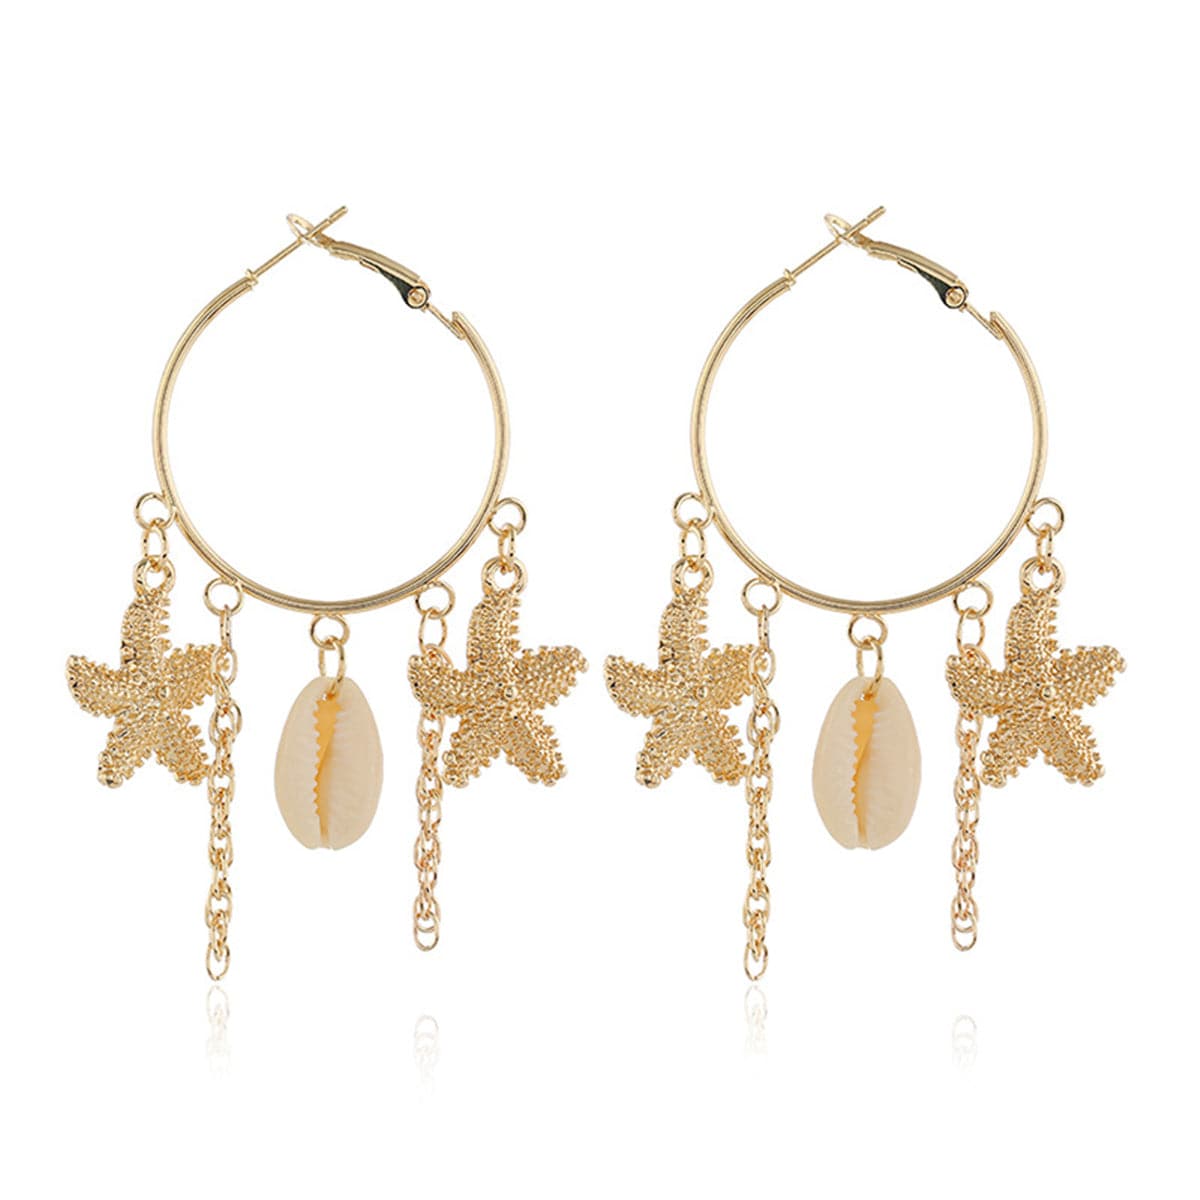 18K Gold-Plated Star & Shell Charm Hoop Earrings